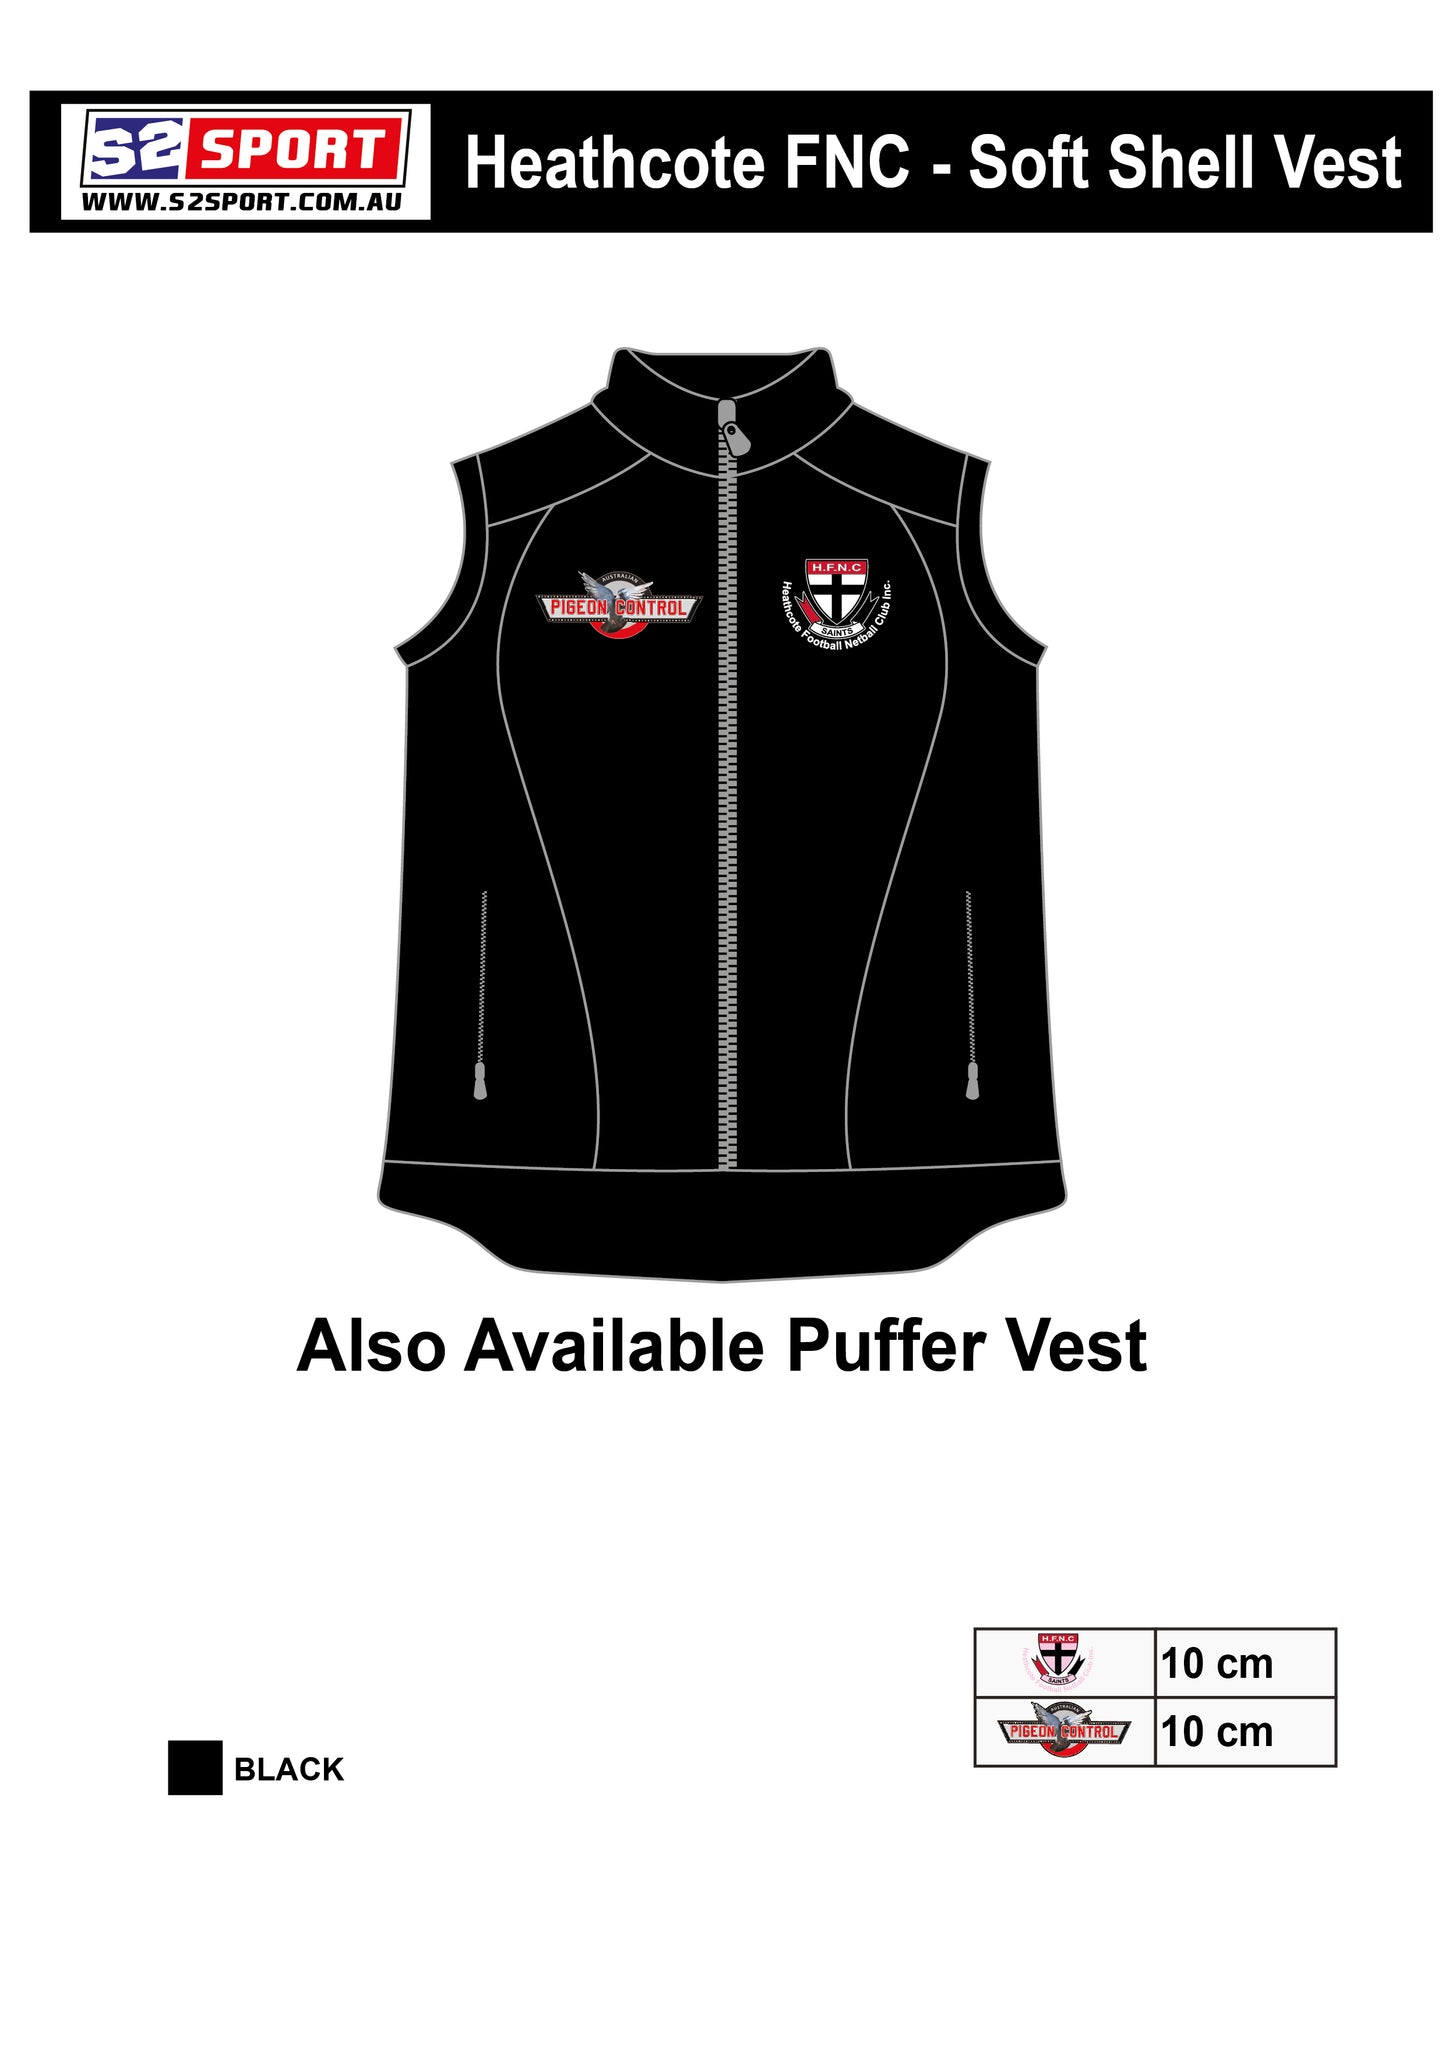 Heathcote Football and Netball Club Jacket & Vest (Puffer / Soft shell)